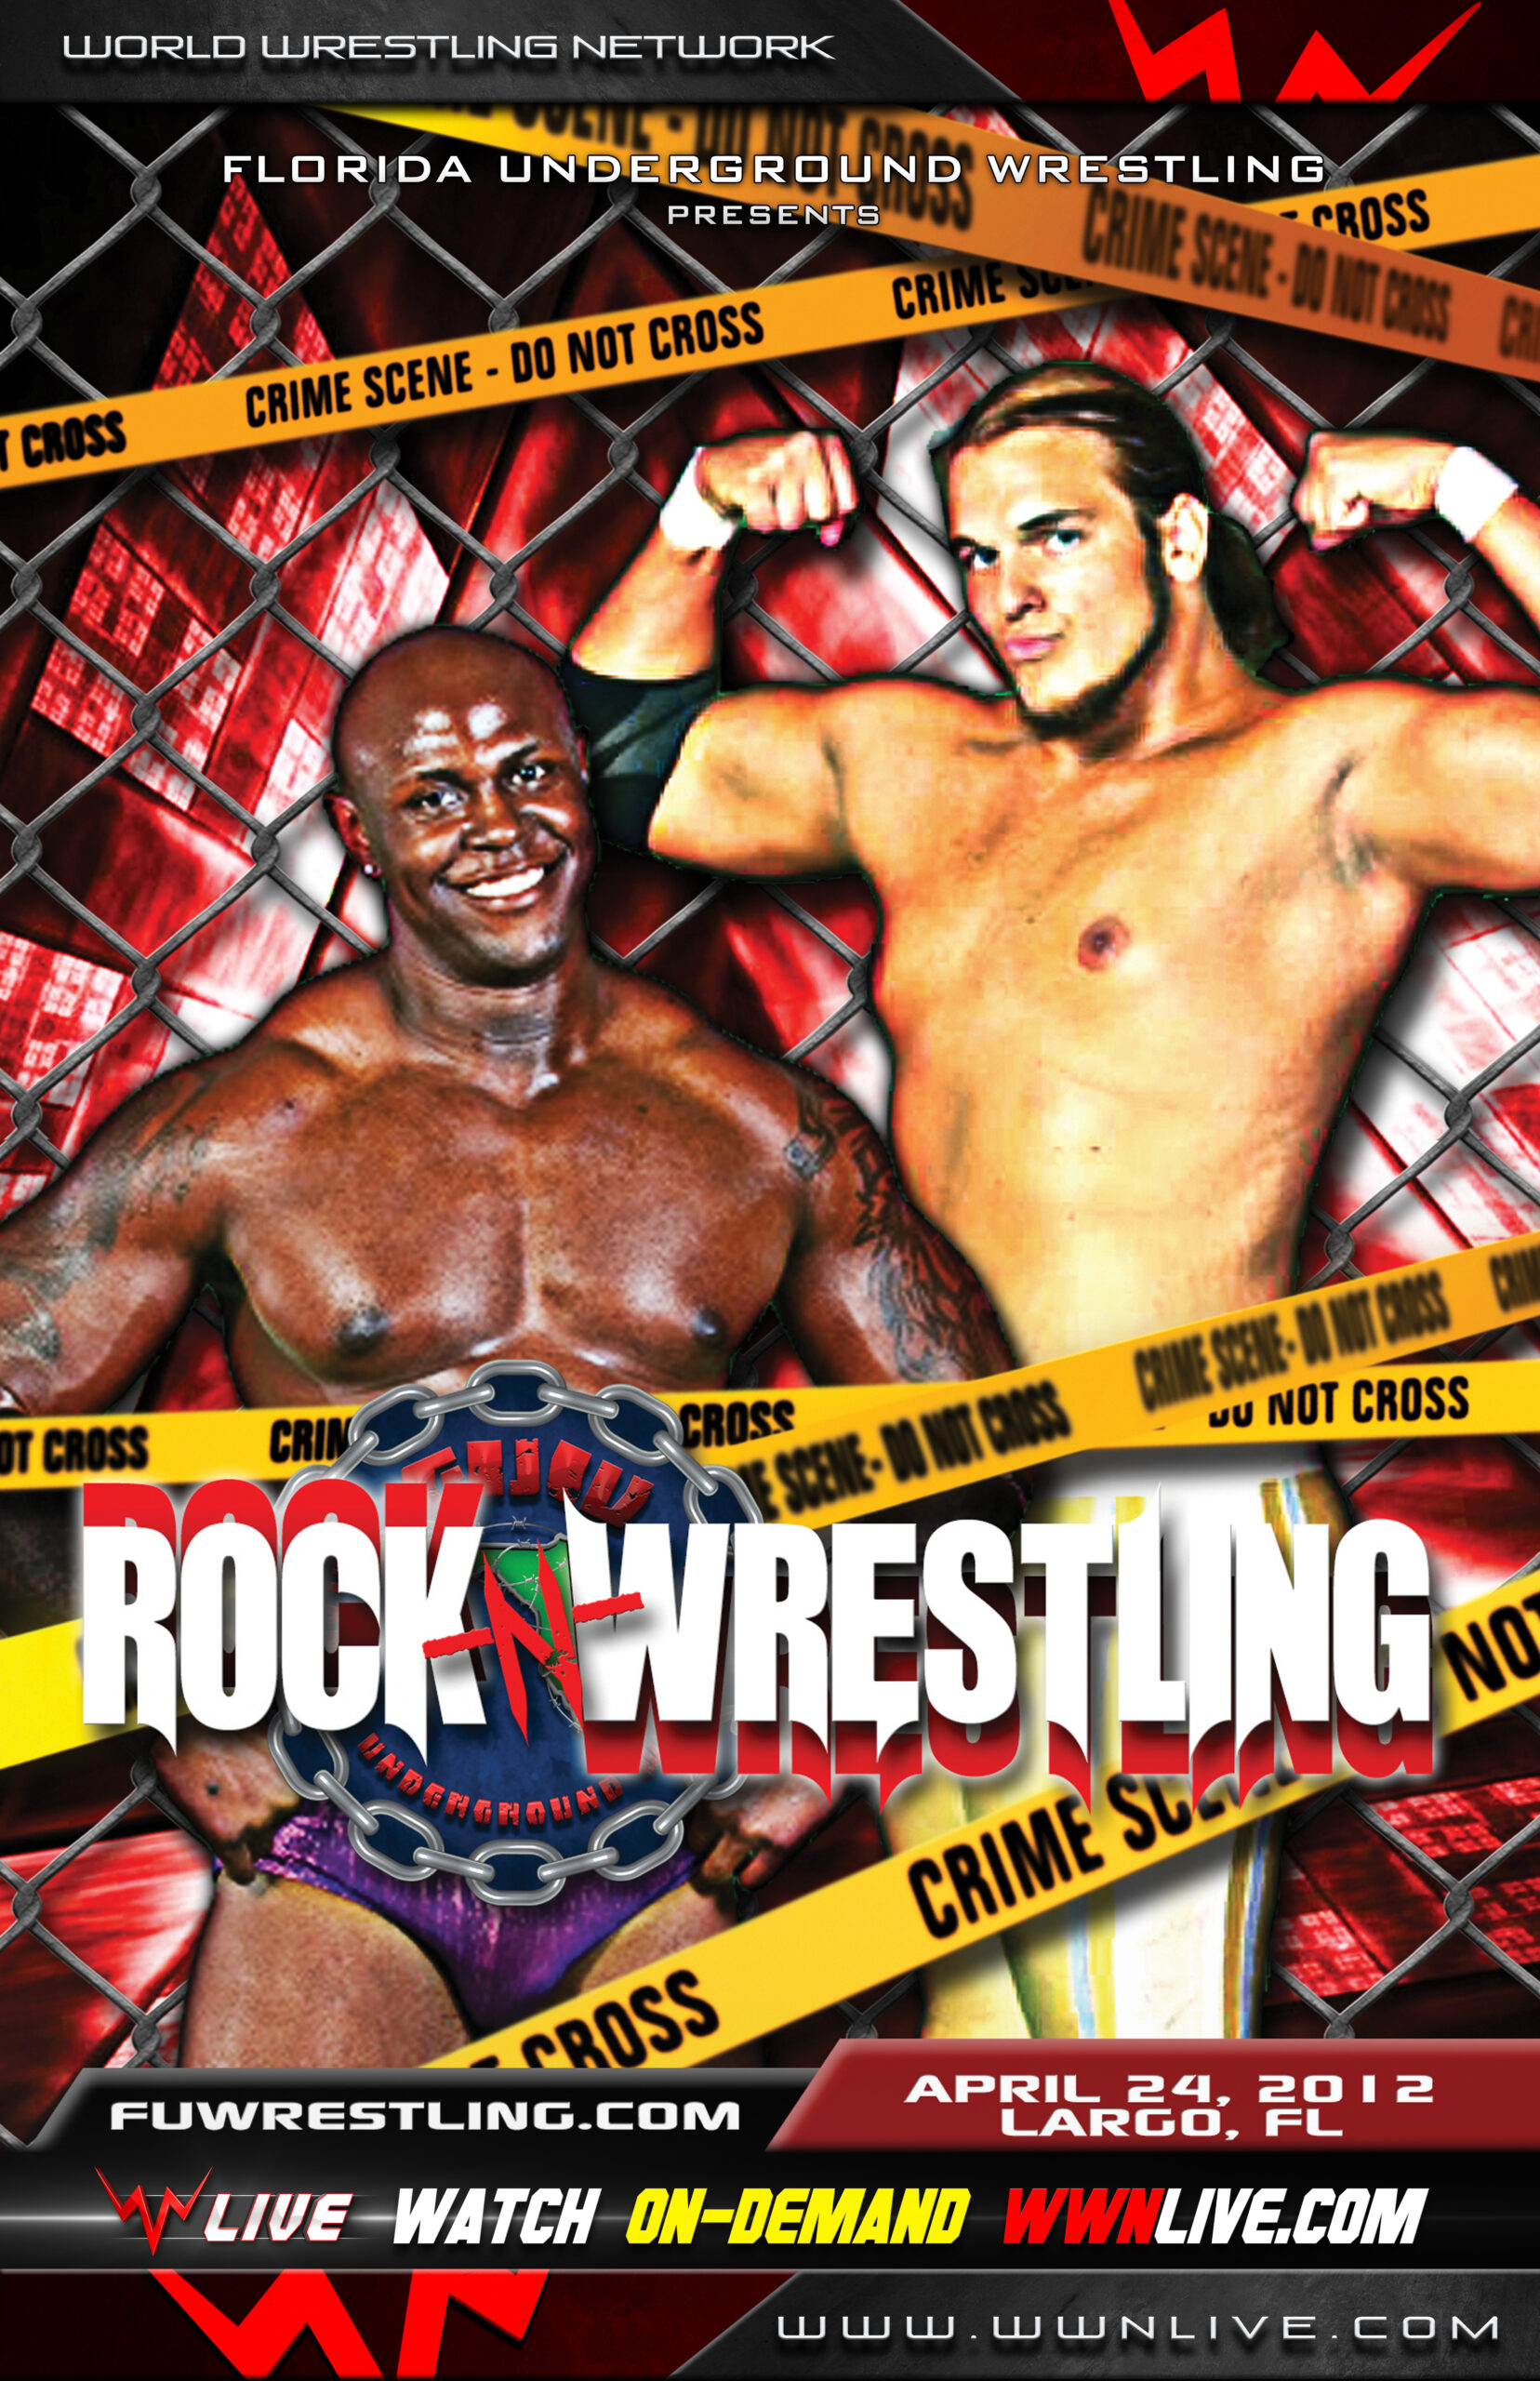 A Florida Underground Wrestling card from 2012 with Sam Adonis as Sam Elias.